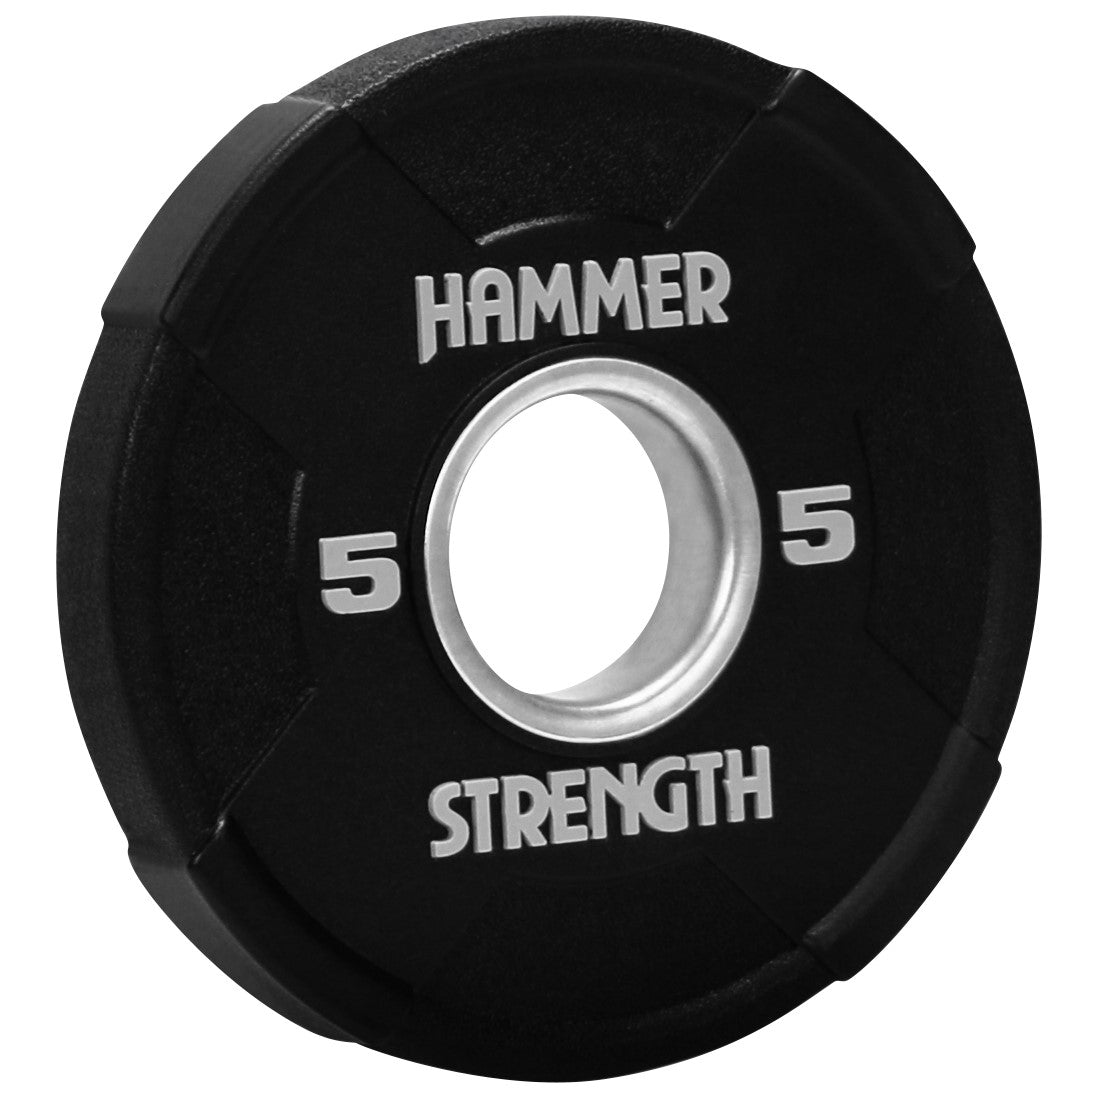 Hammer Strength Urethane Round Olympic Plates - 5 lbs.